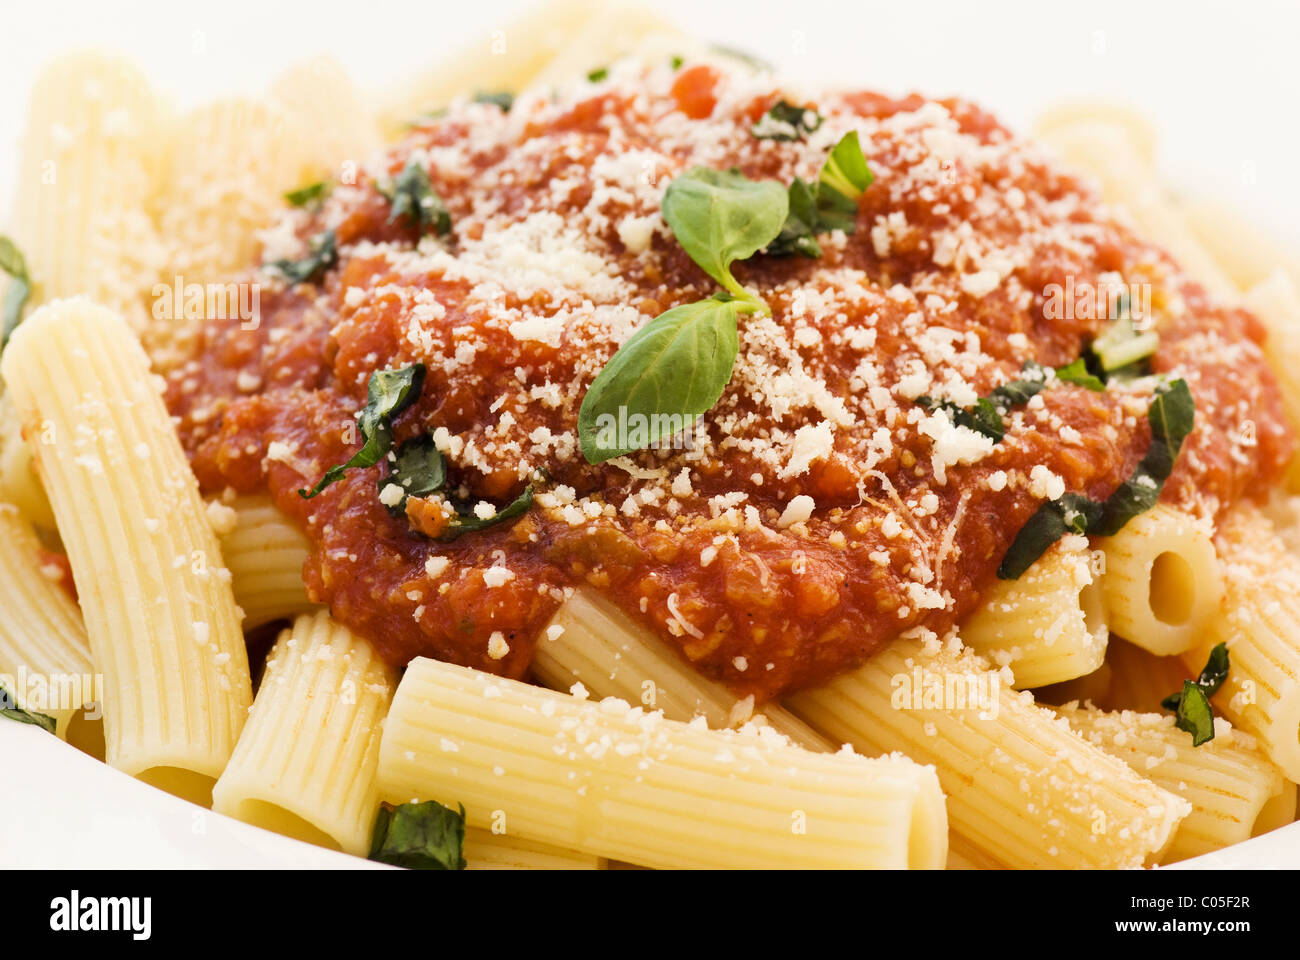 Rigatoni with sauce Stock Photo